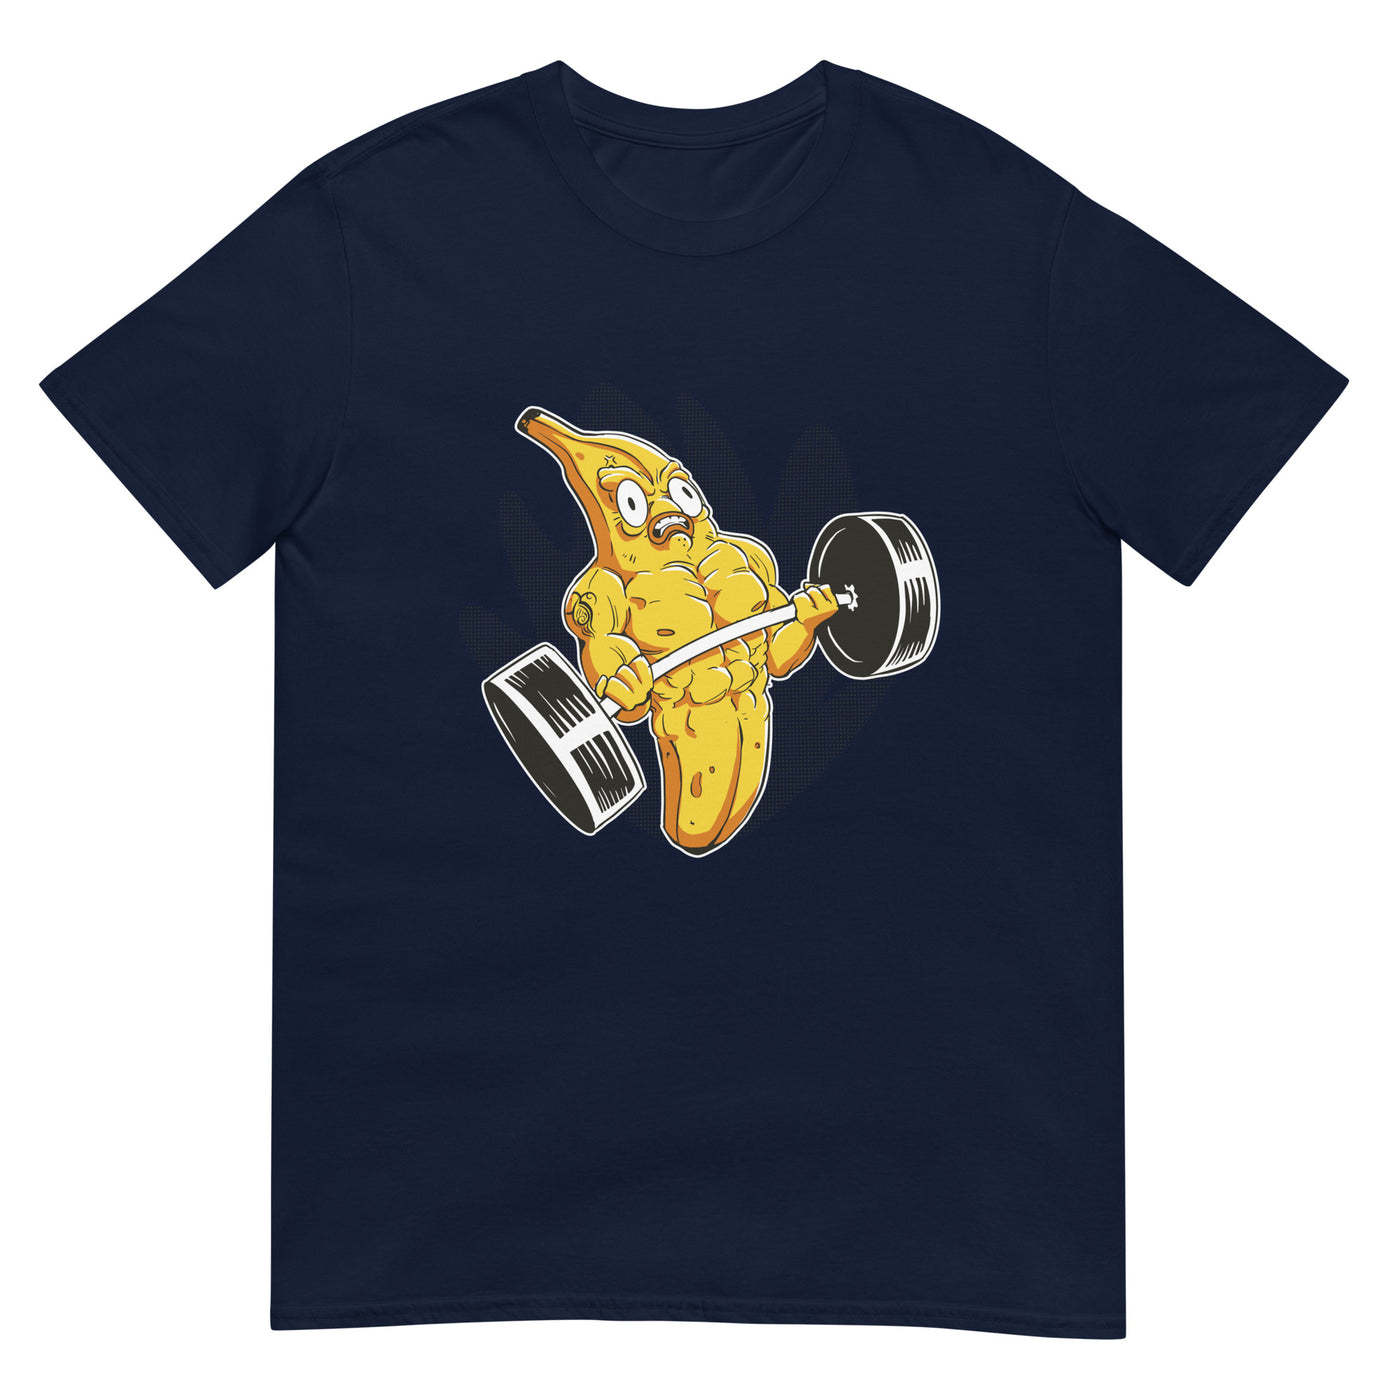 Banane hebt Hantel und ist muskulös - Verrückter Blick - Herren T-Shirt Other_Niches xxx yyy zzz Navy